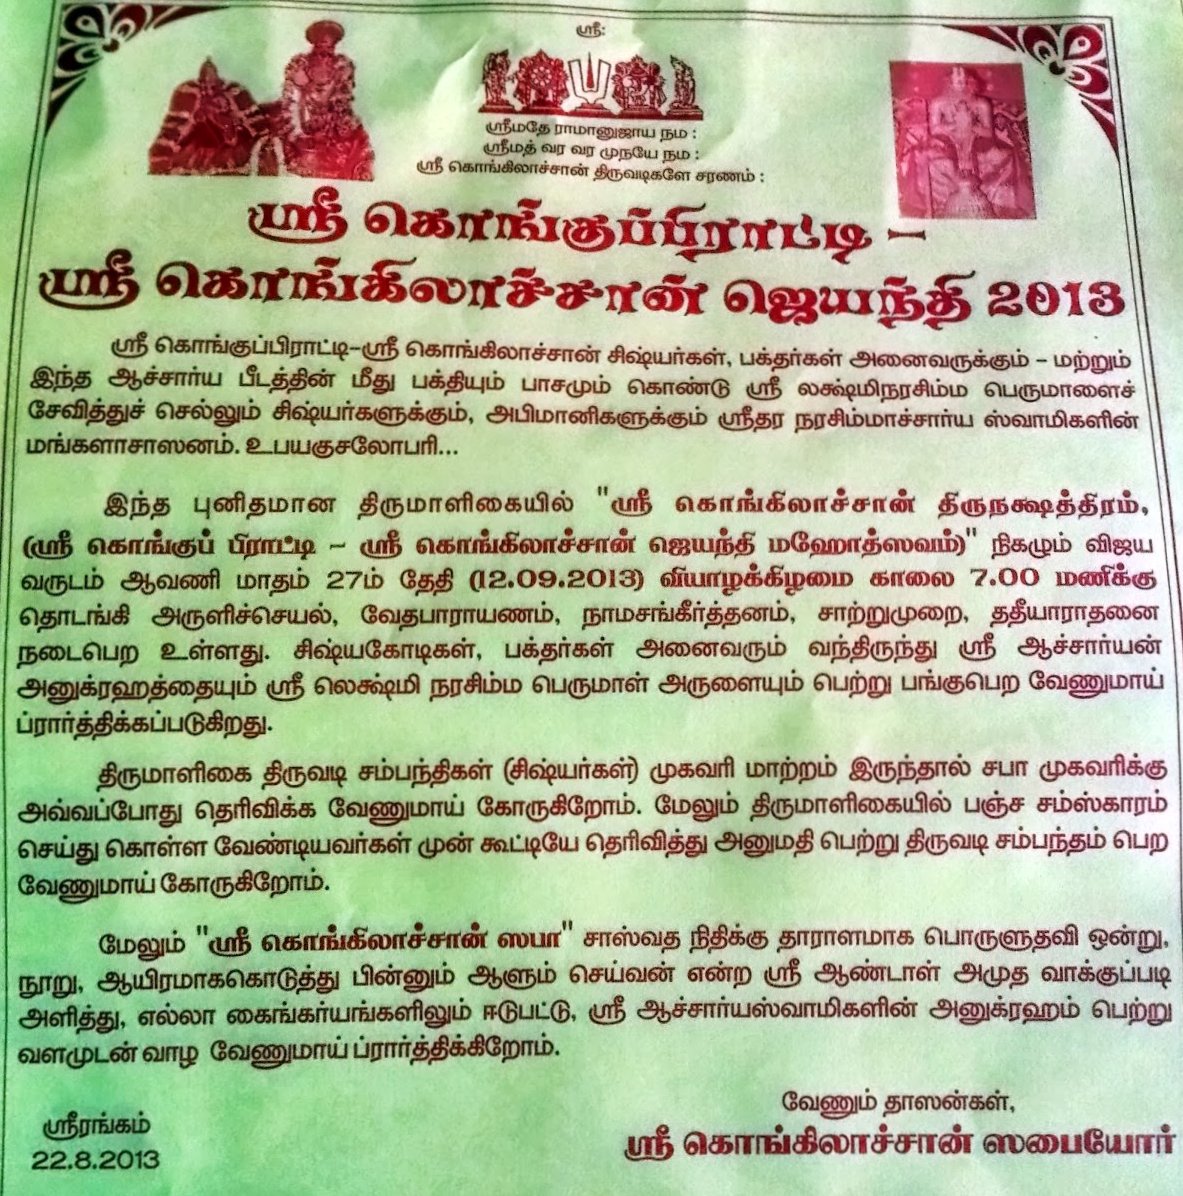 Kongilachan Thirunakshatram invite